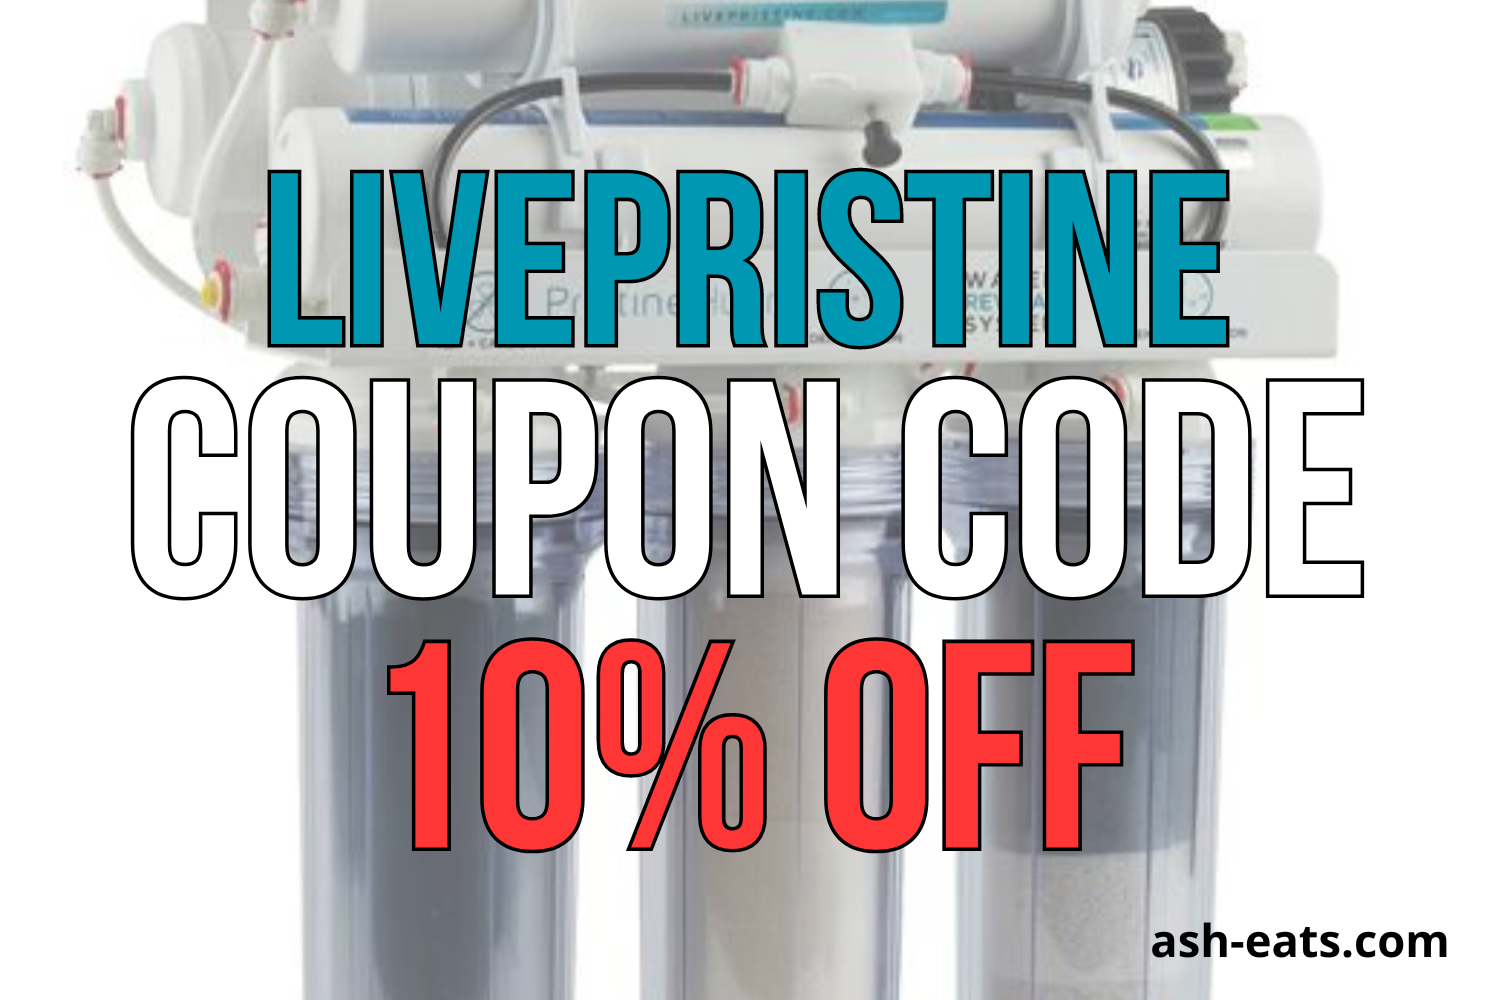 livepristine coupon code